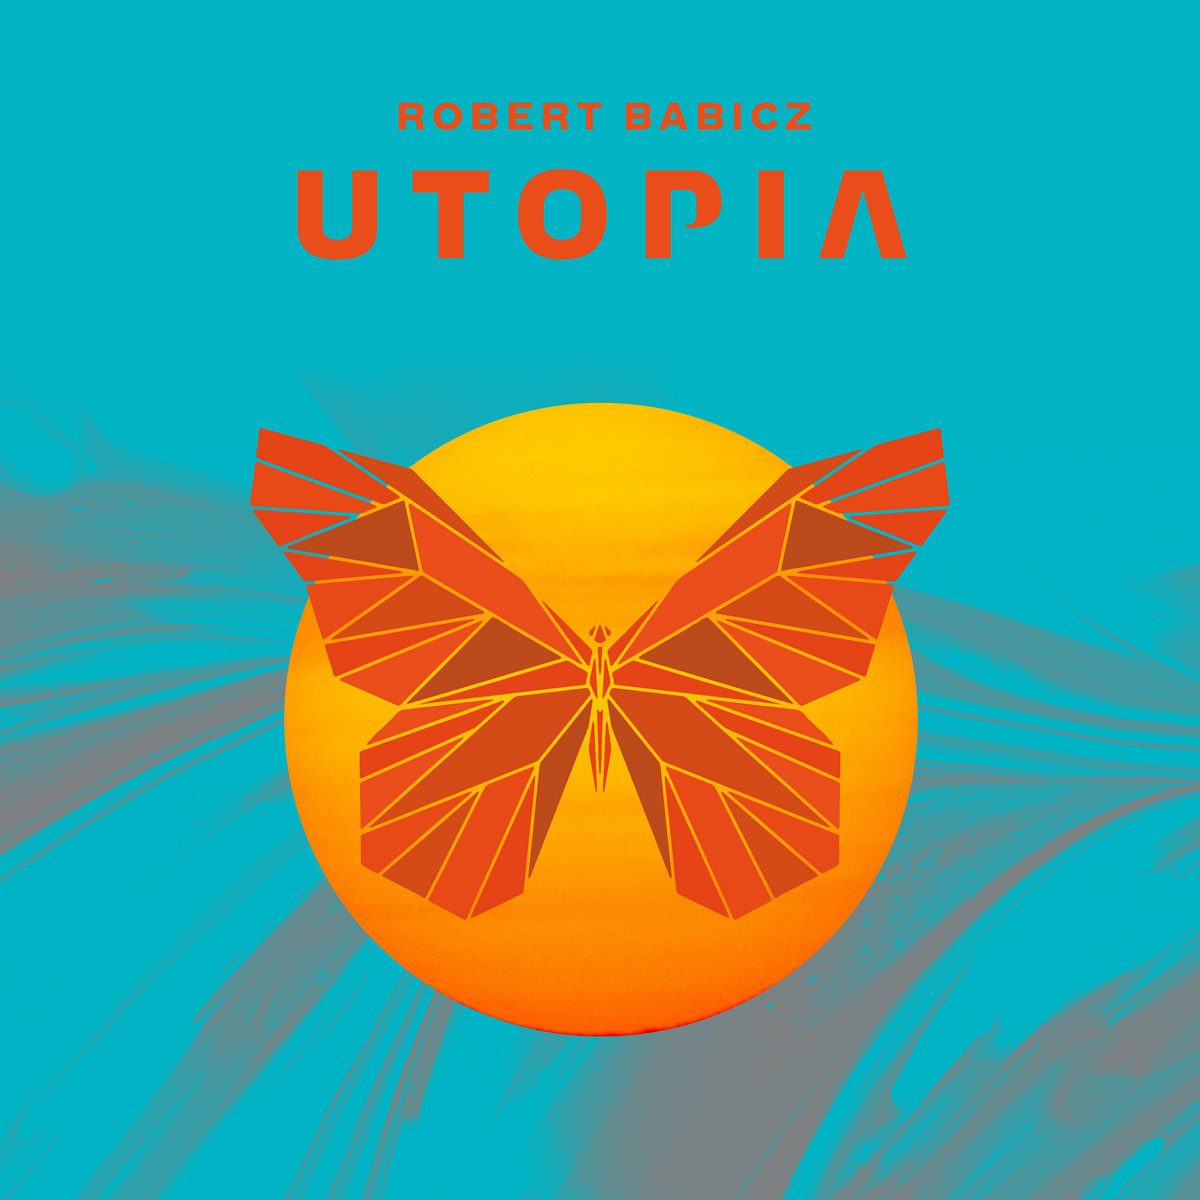 Robert Babicz — Utopia (Systematic, 2020)